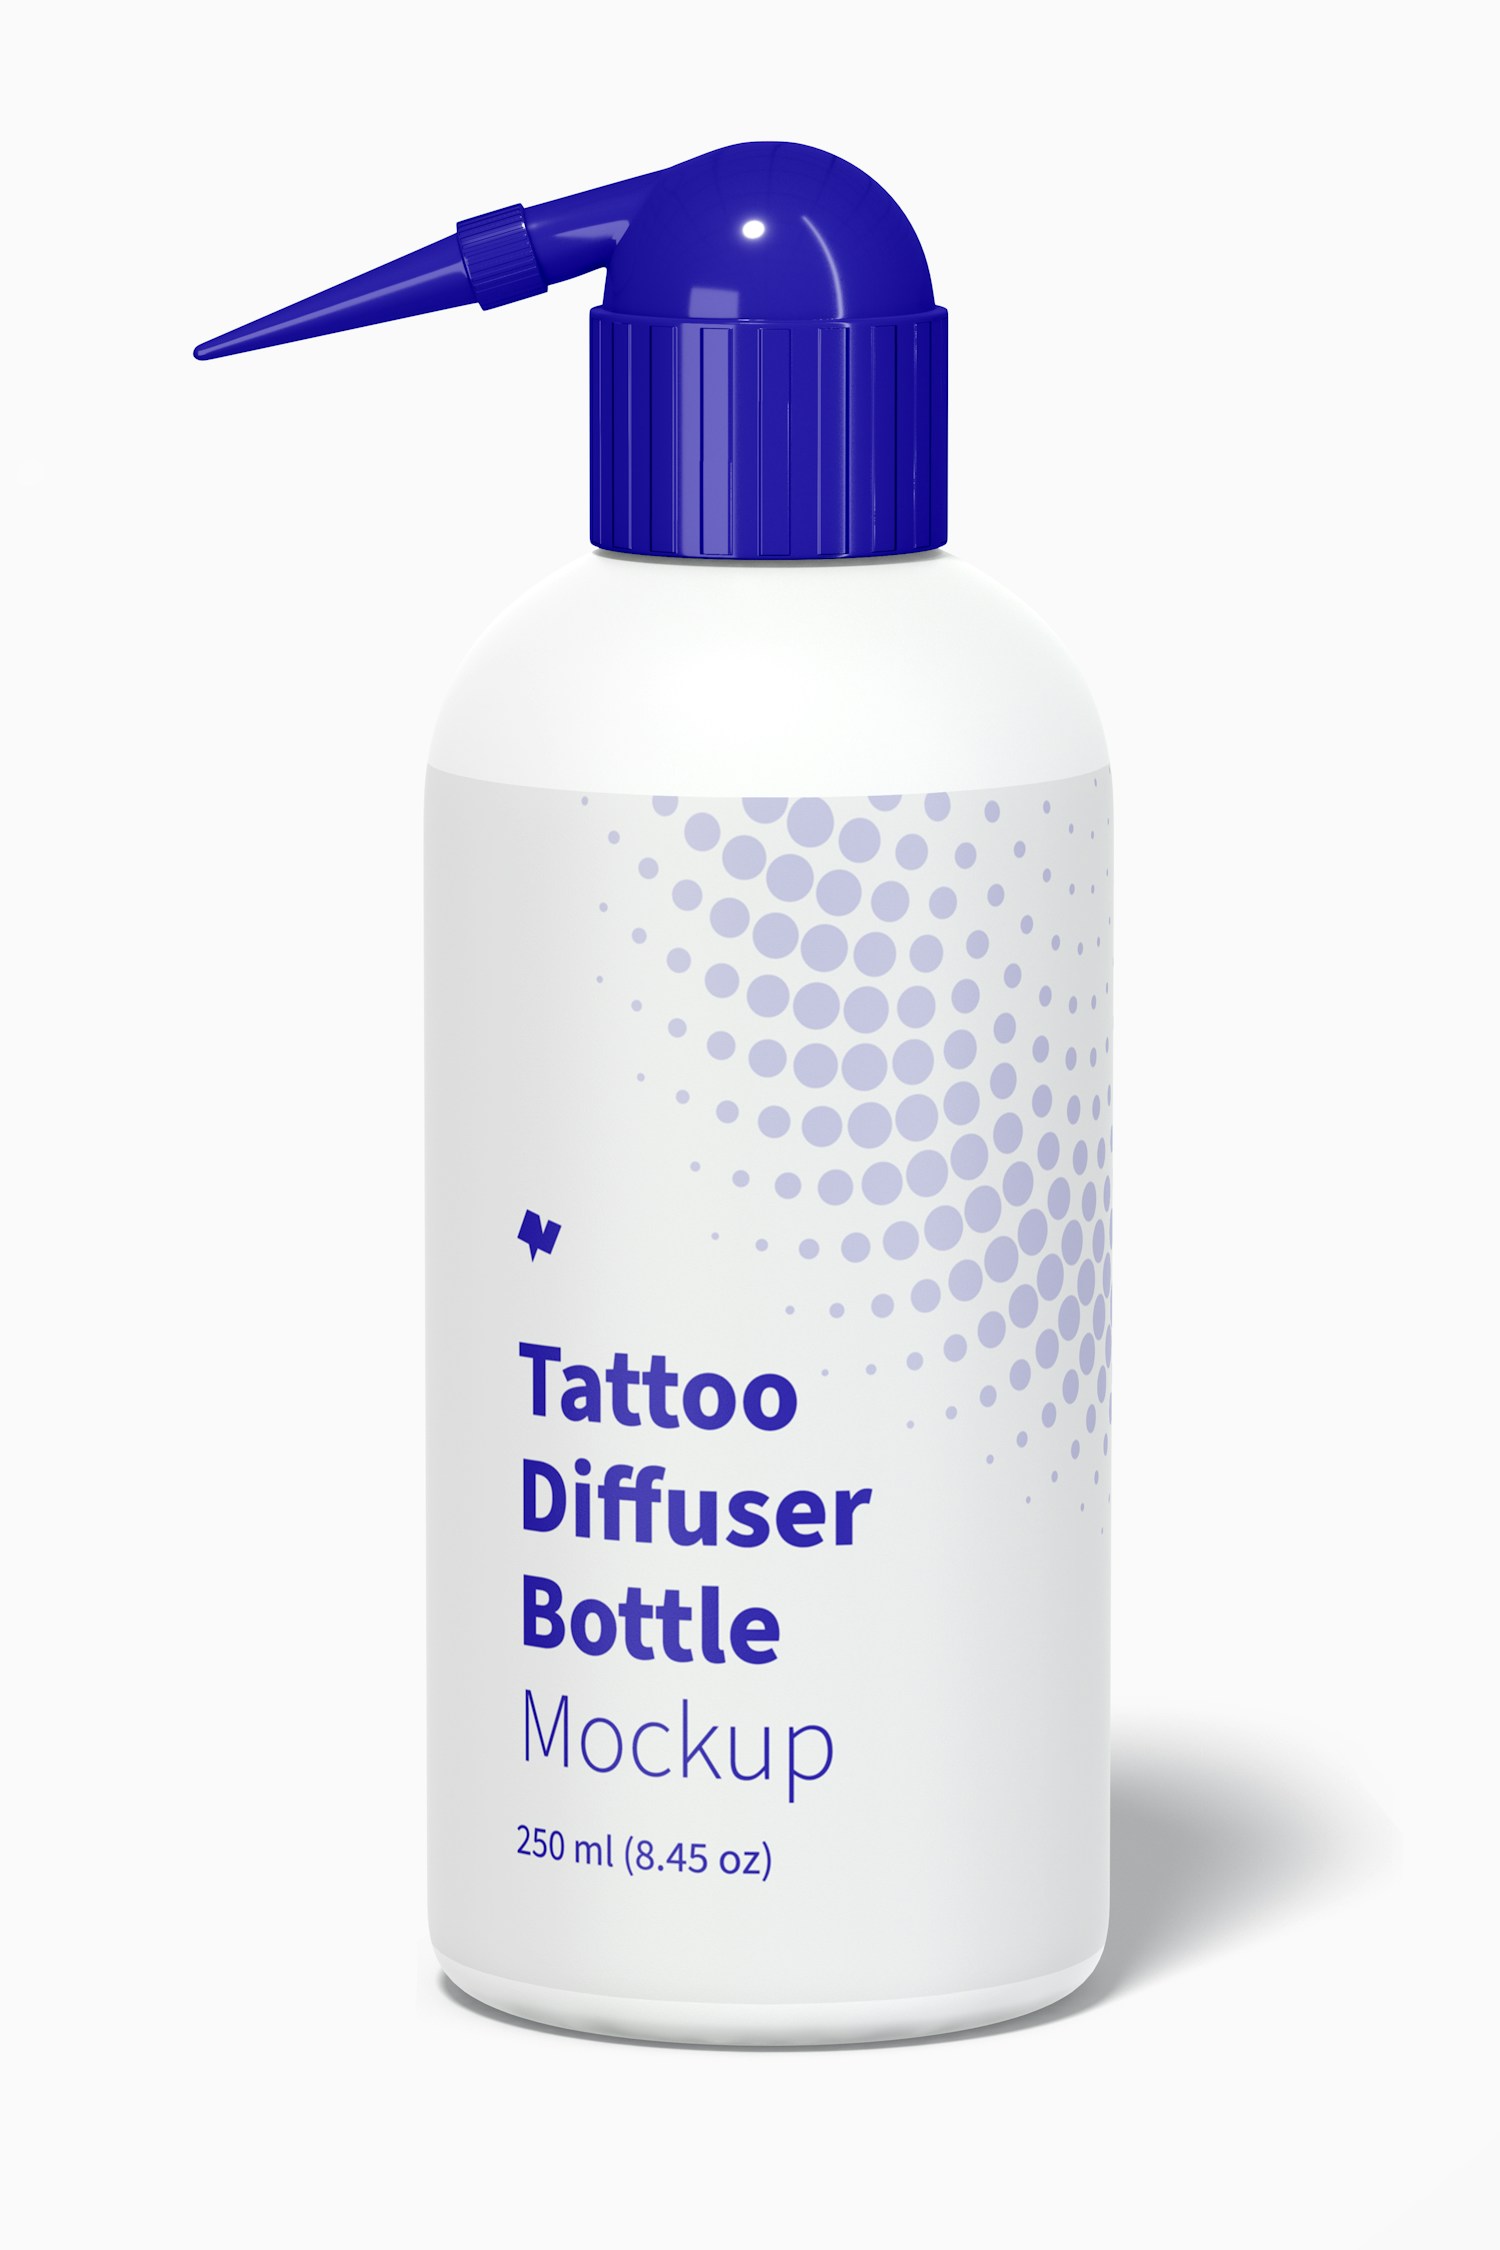 Tattoo Diffuser Bottle Mockup